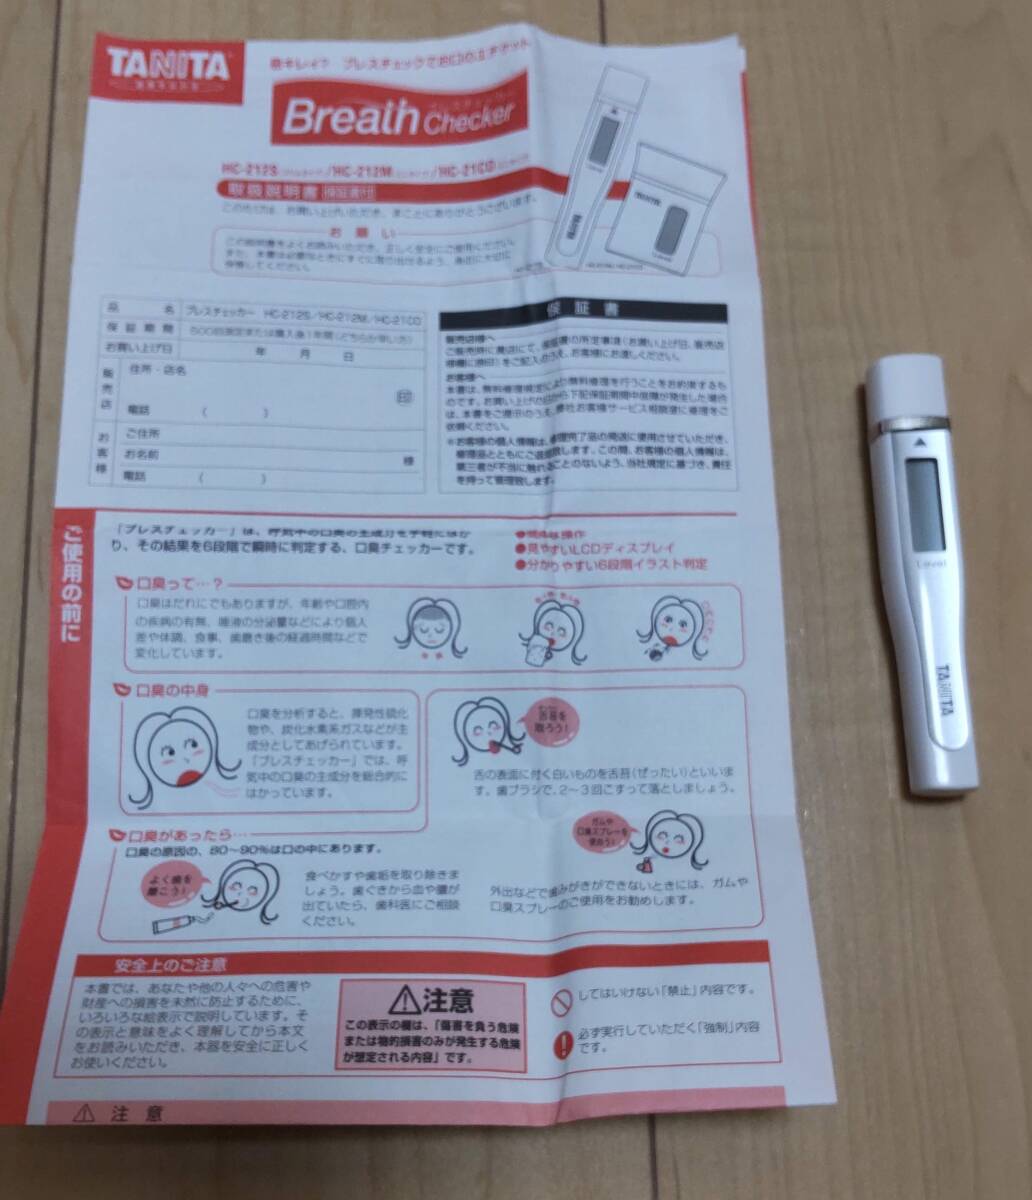 !TANITAtanita breath checker HC-212S white! used beautiful goods bad breath check bad breath checker bad breath inspection equipment 